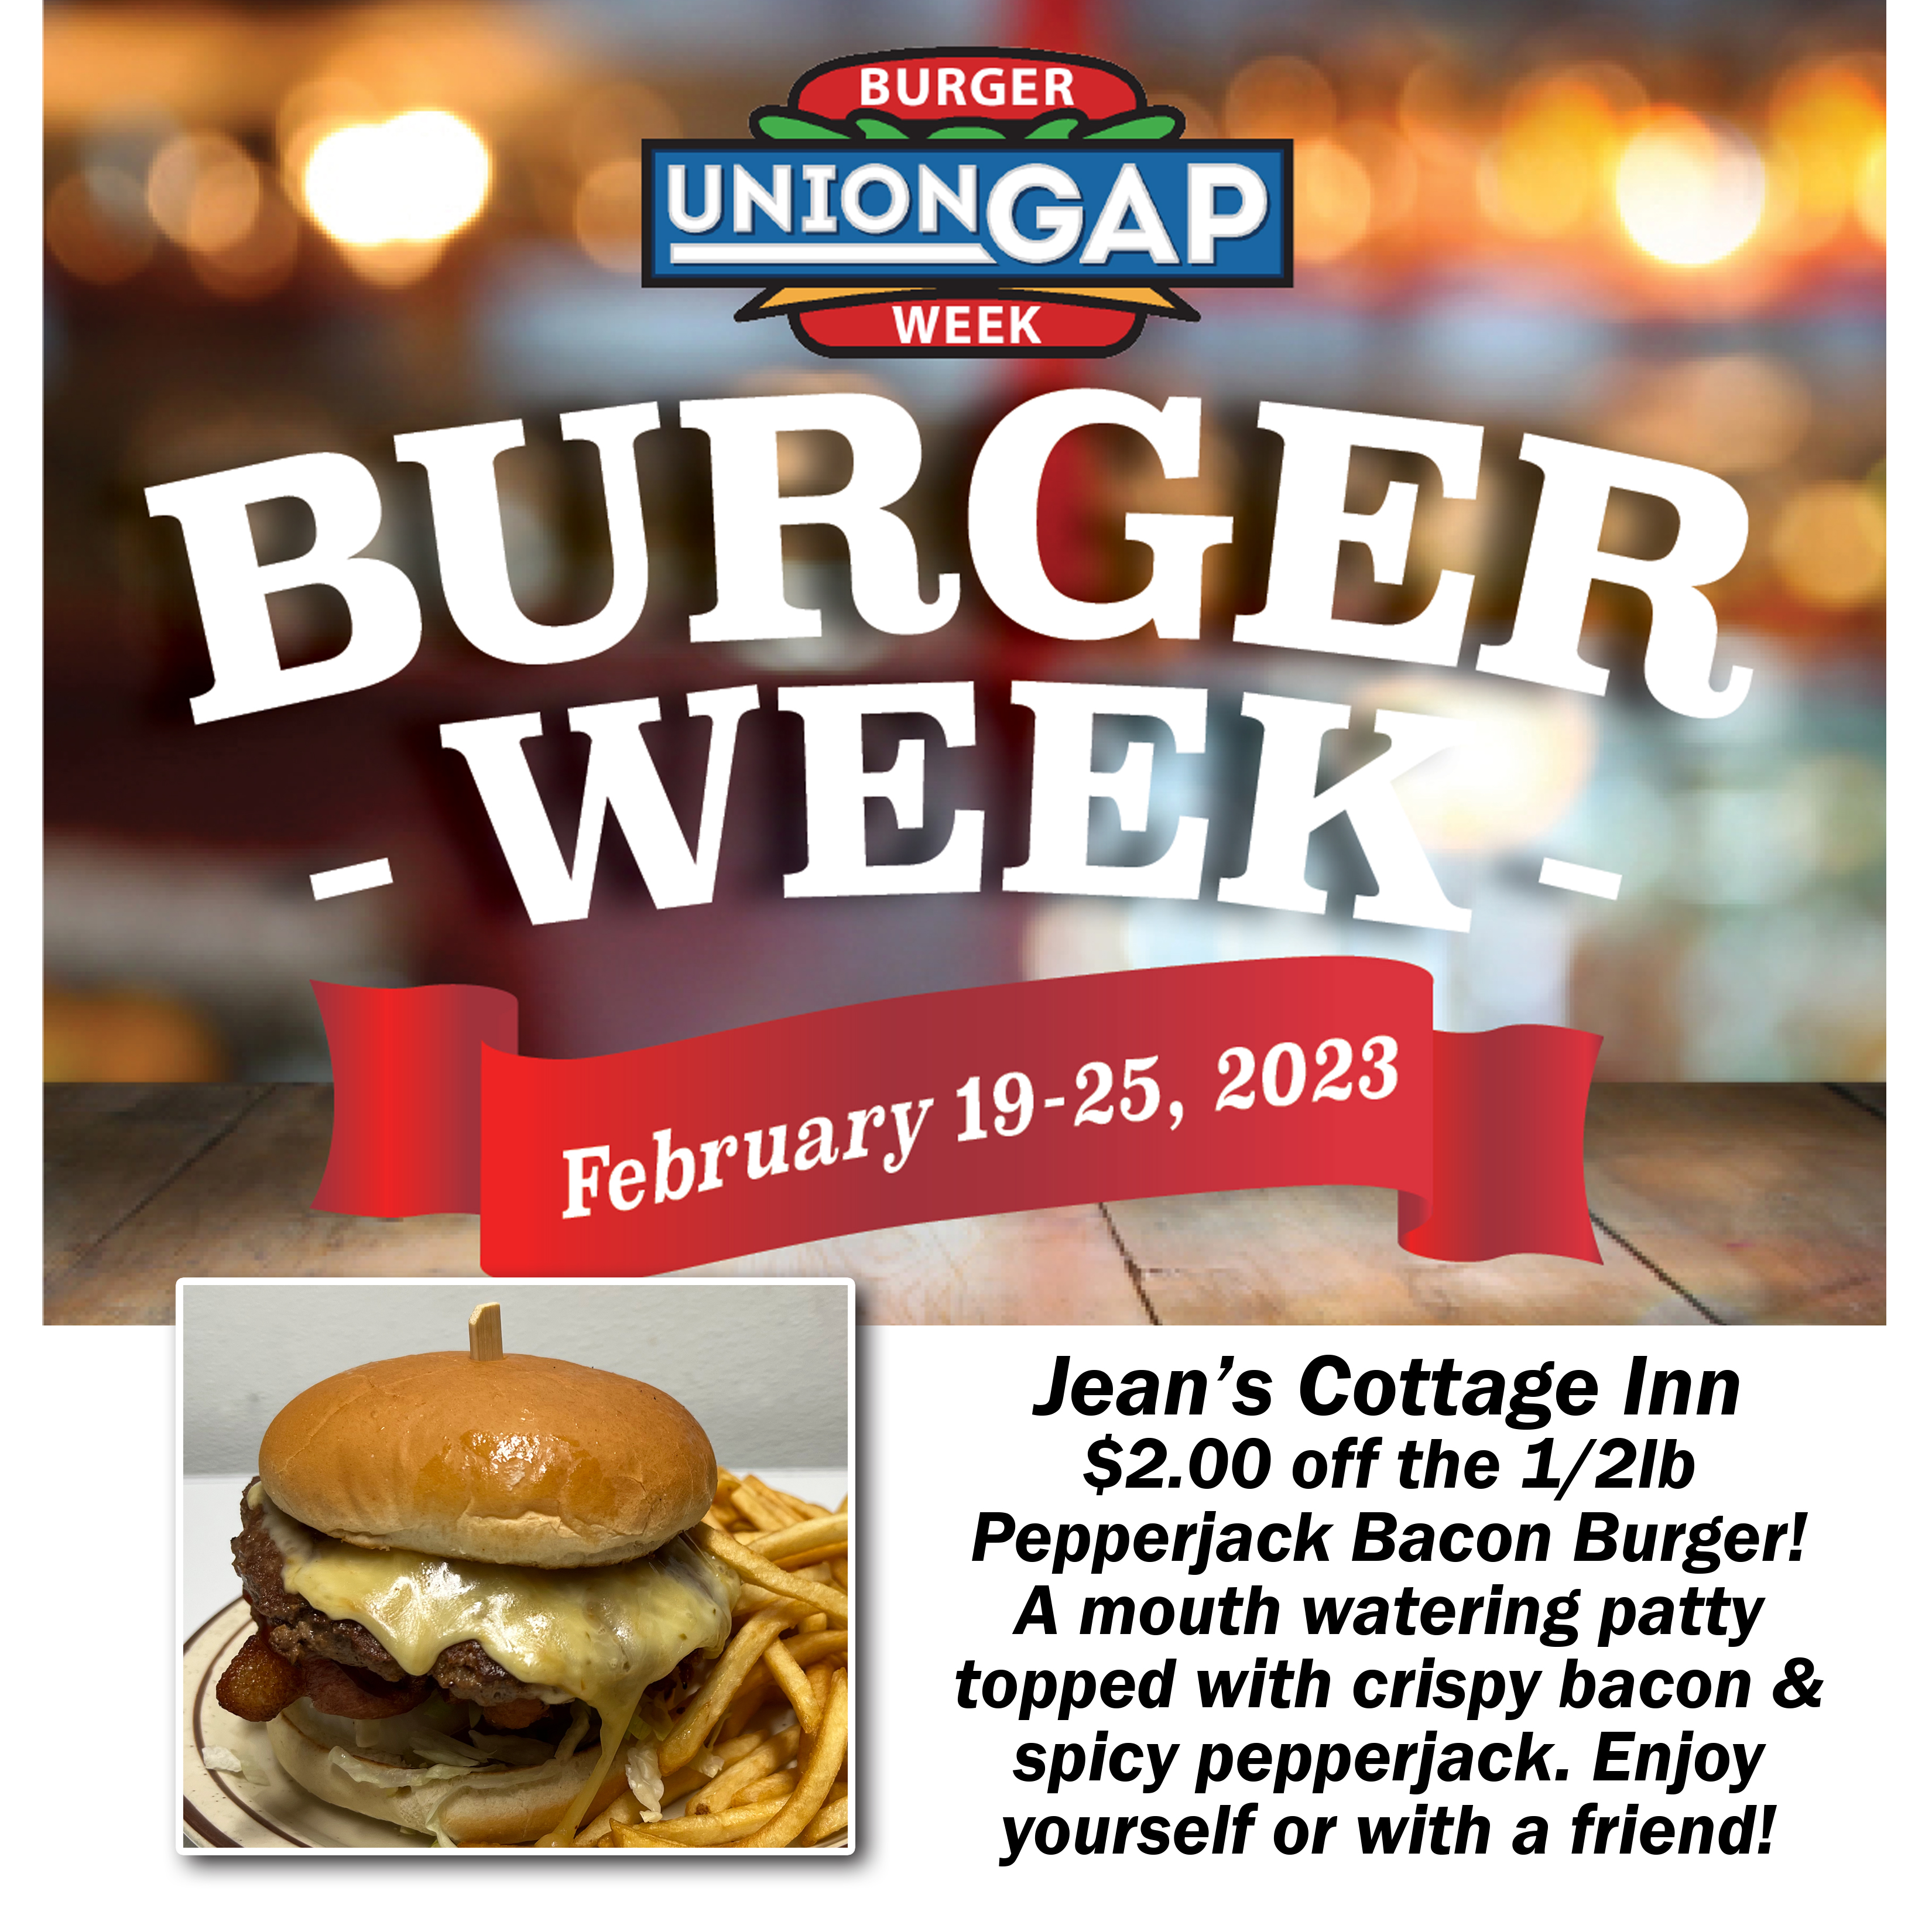 A flyer advertising Burger Week in Union Gap.